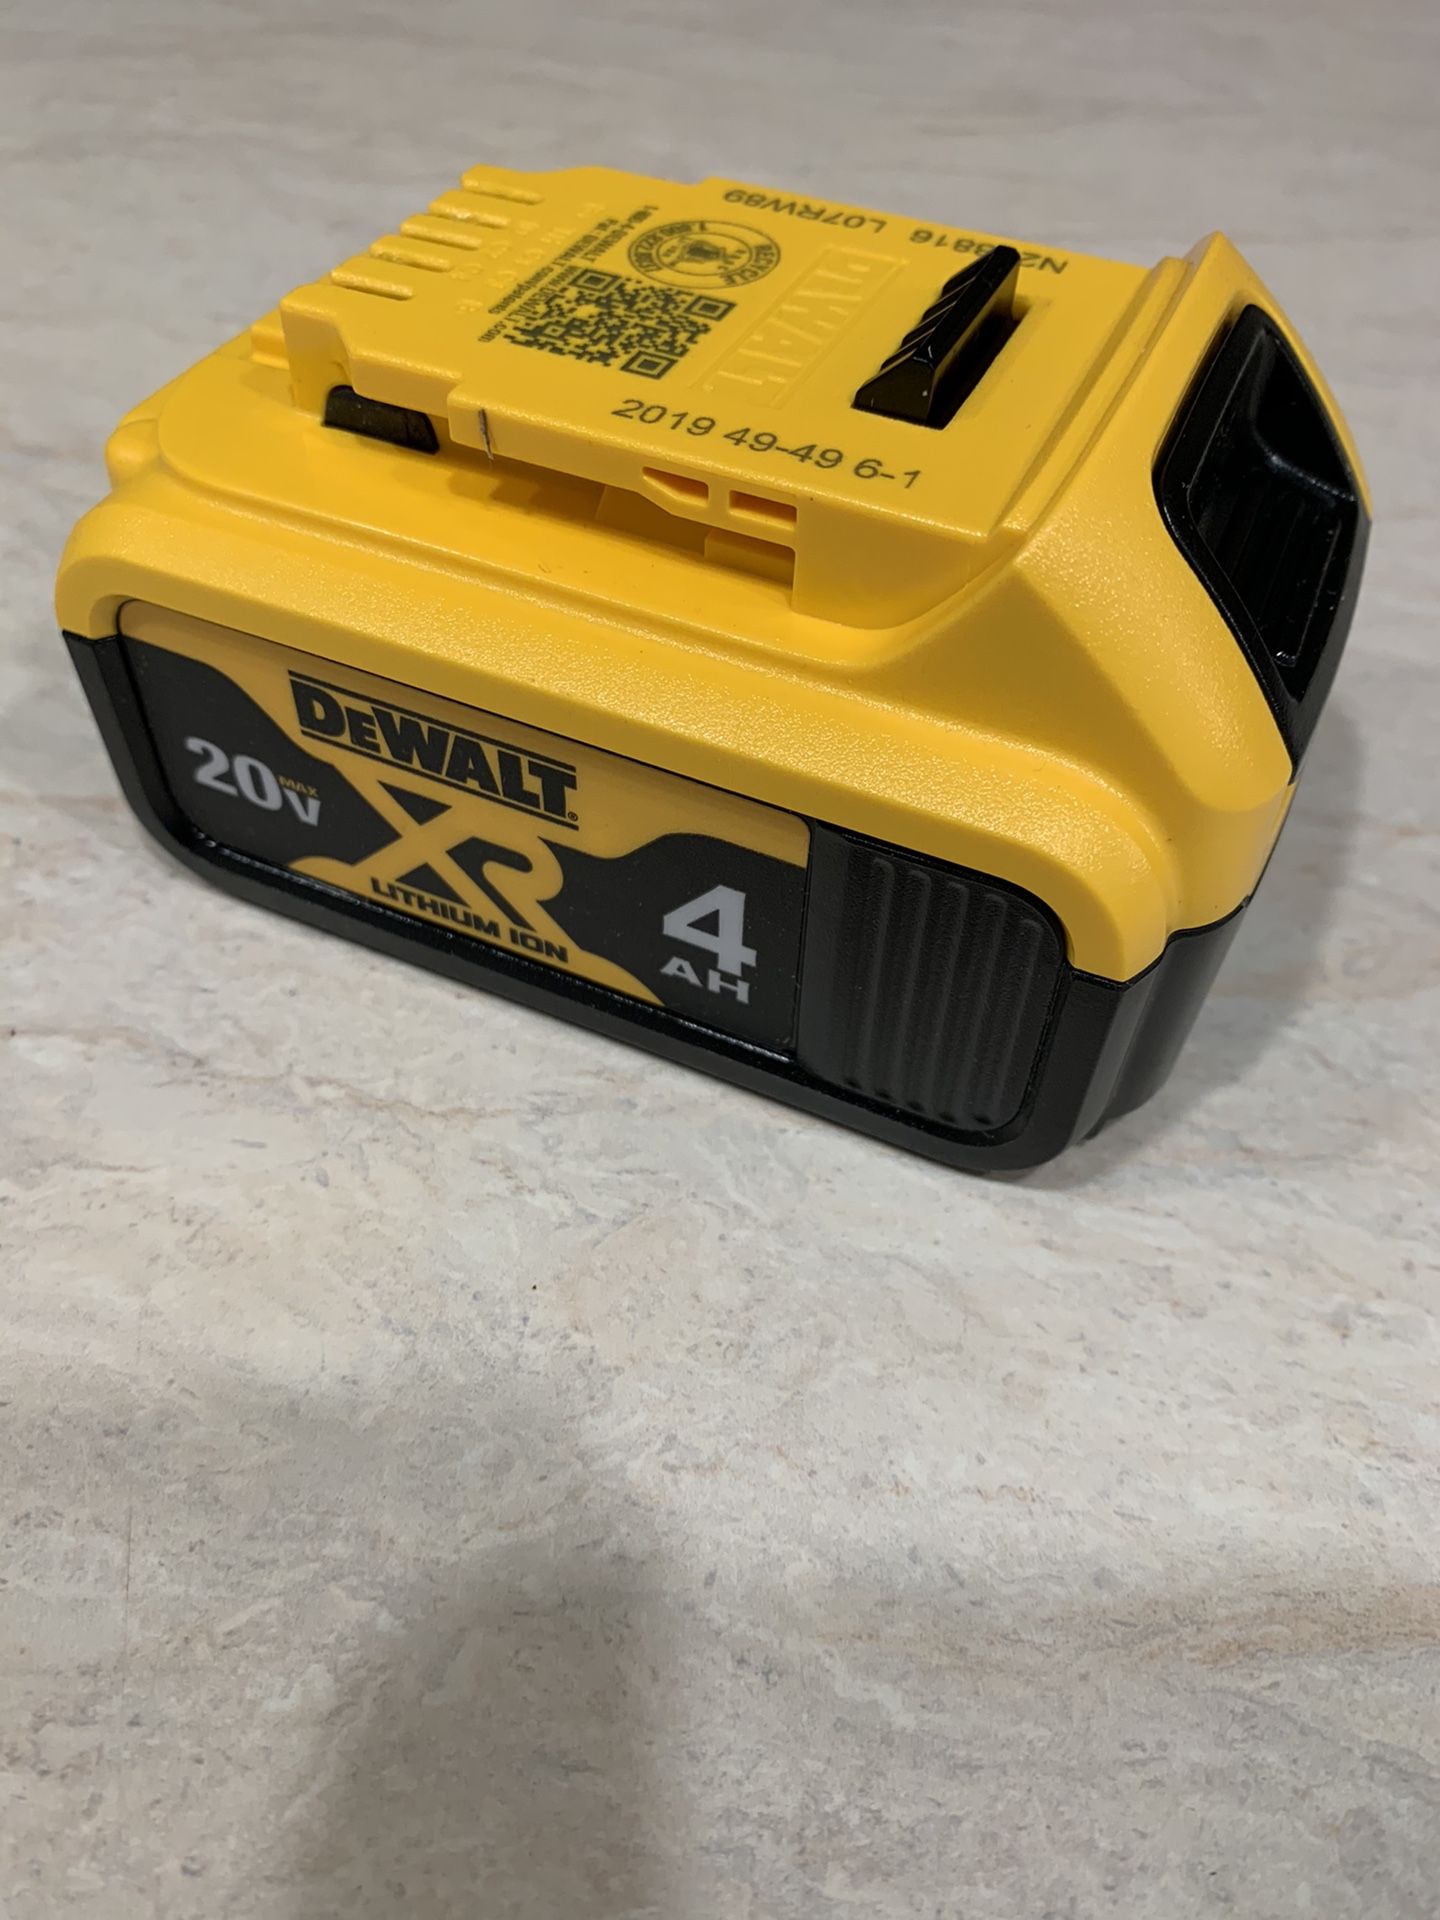 Dewalt xr4.0 battery. $50 price is firm